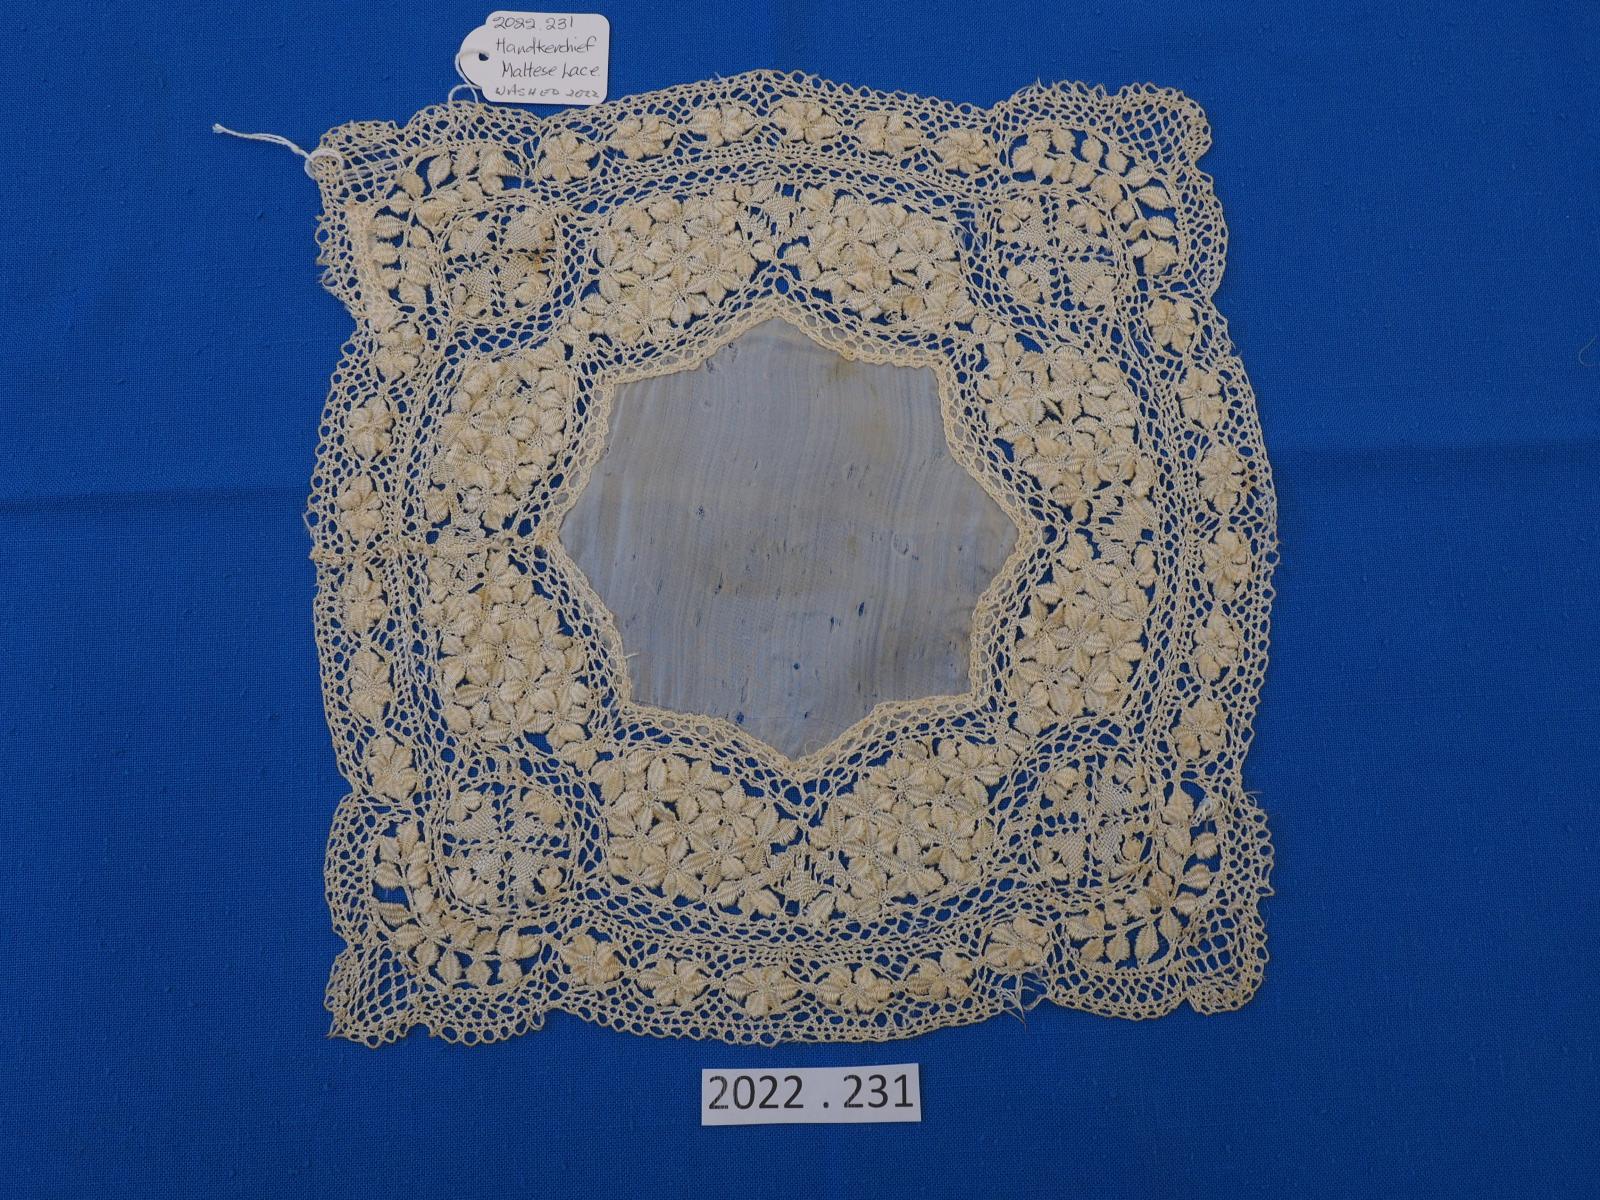 Maltese lace handkerchief